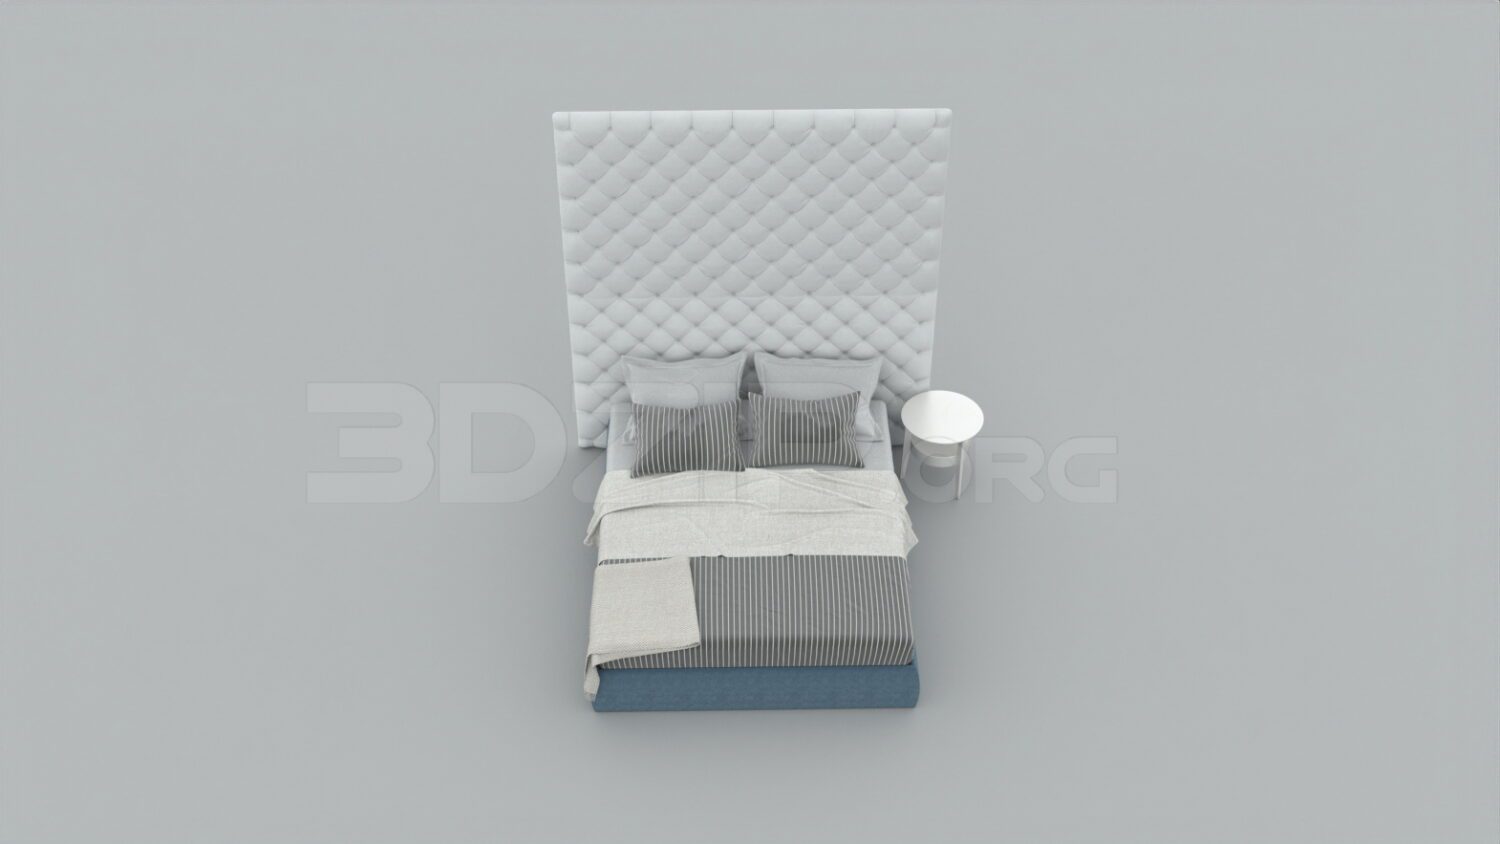 2980. Free 3D Bed Model Download